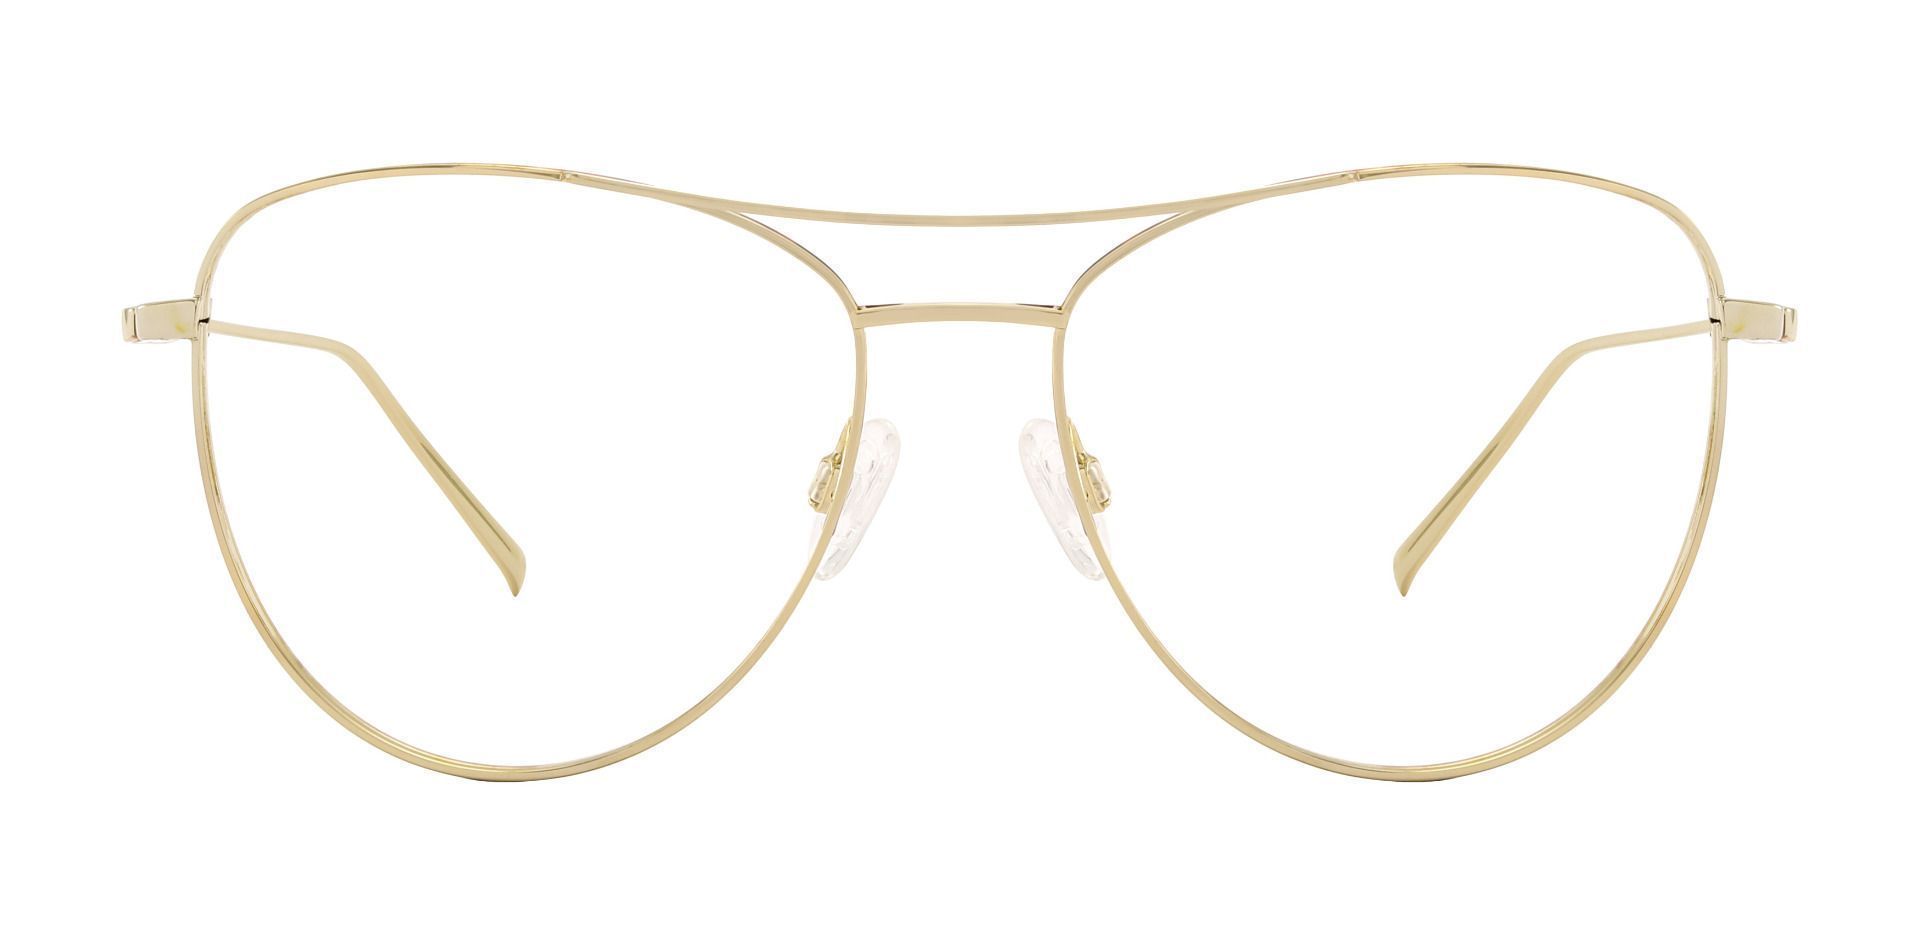 Gellar Aviator Prescription Glasses - Gold